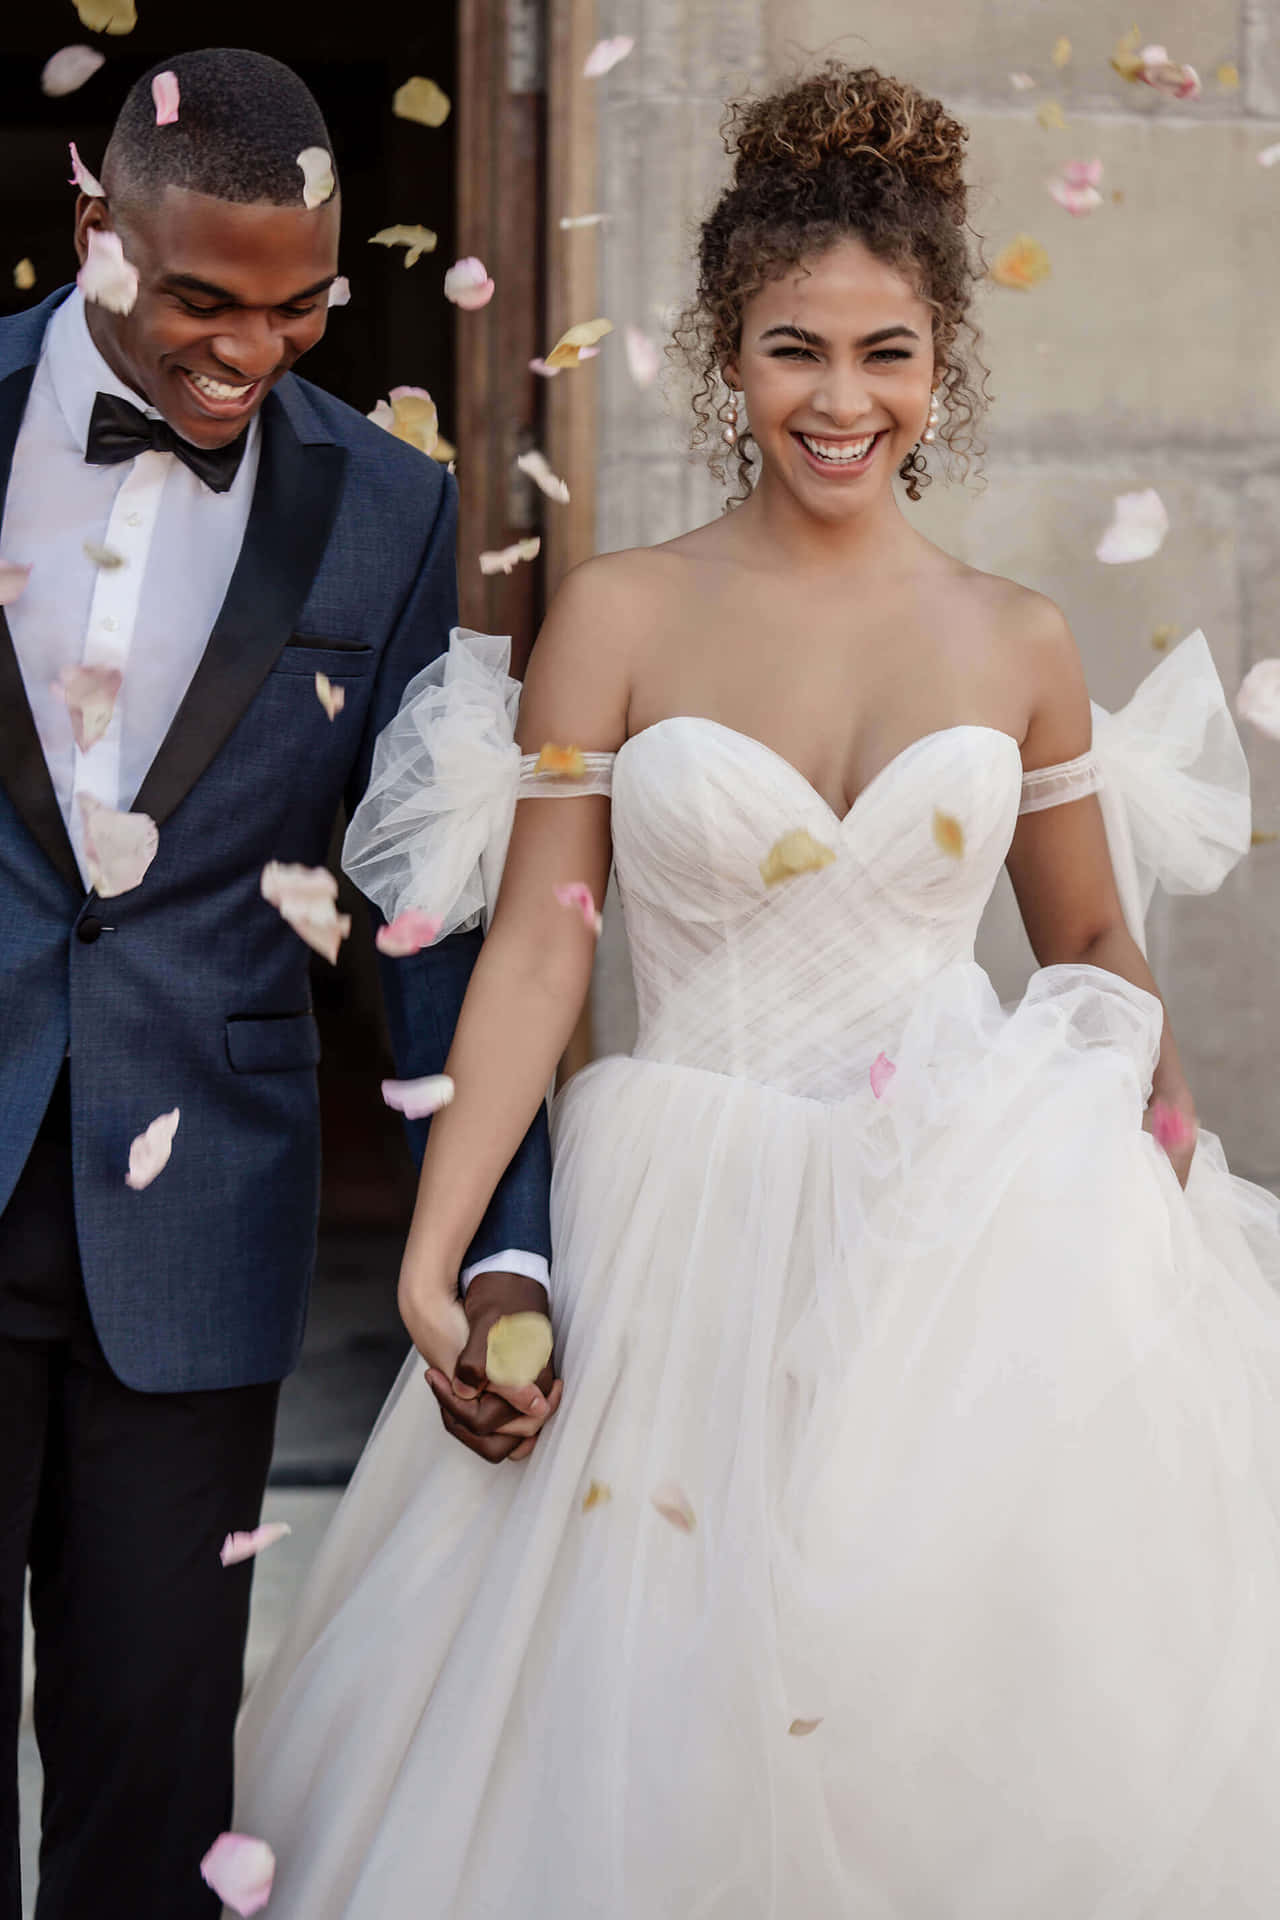 A Bride And Groom Walking Through Confetti